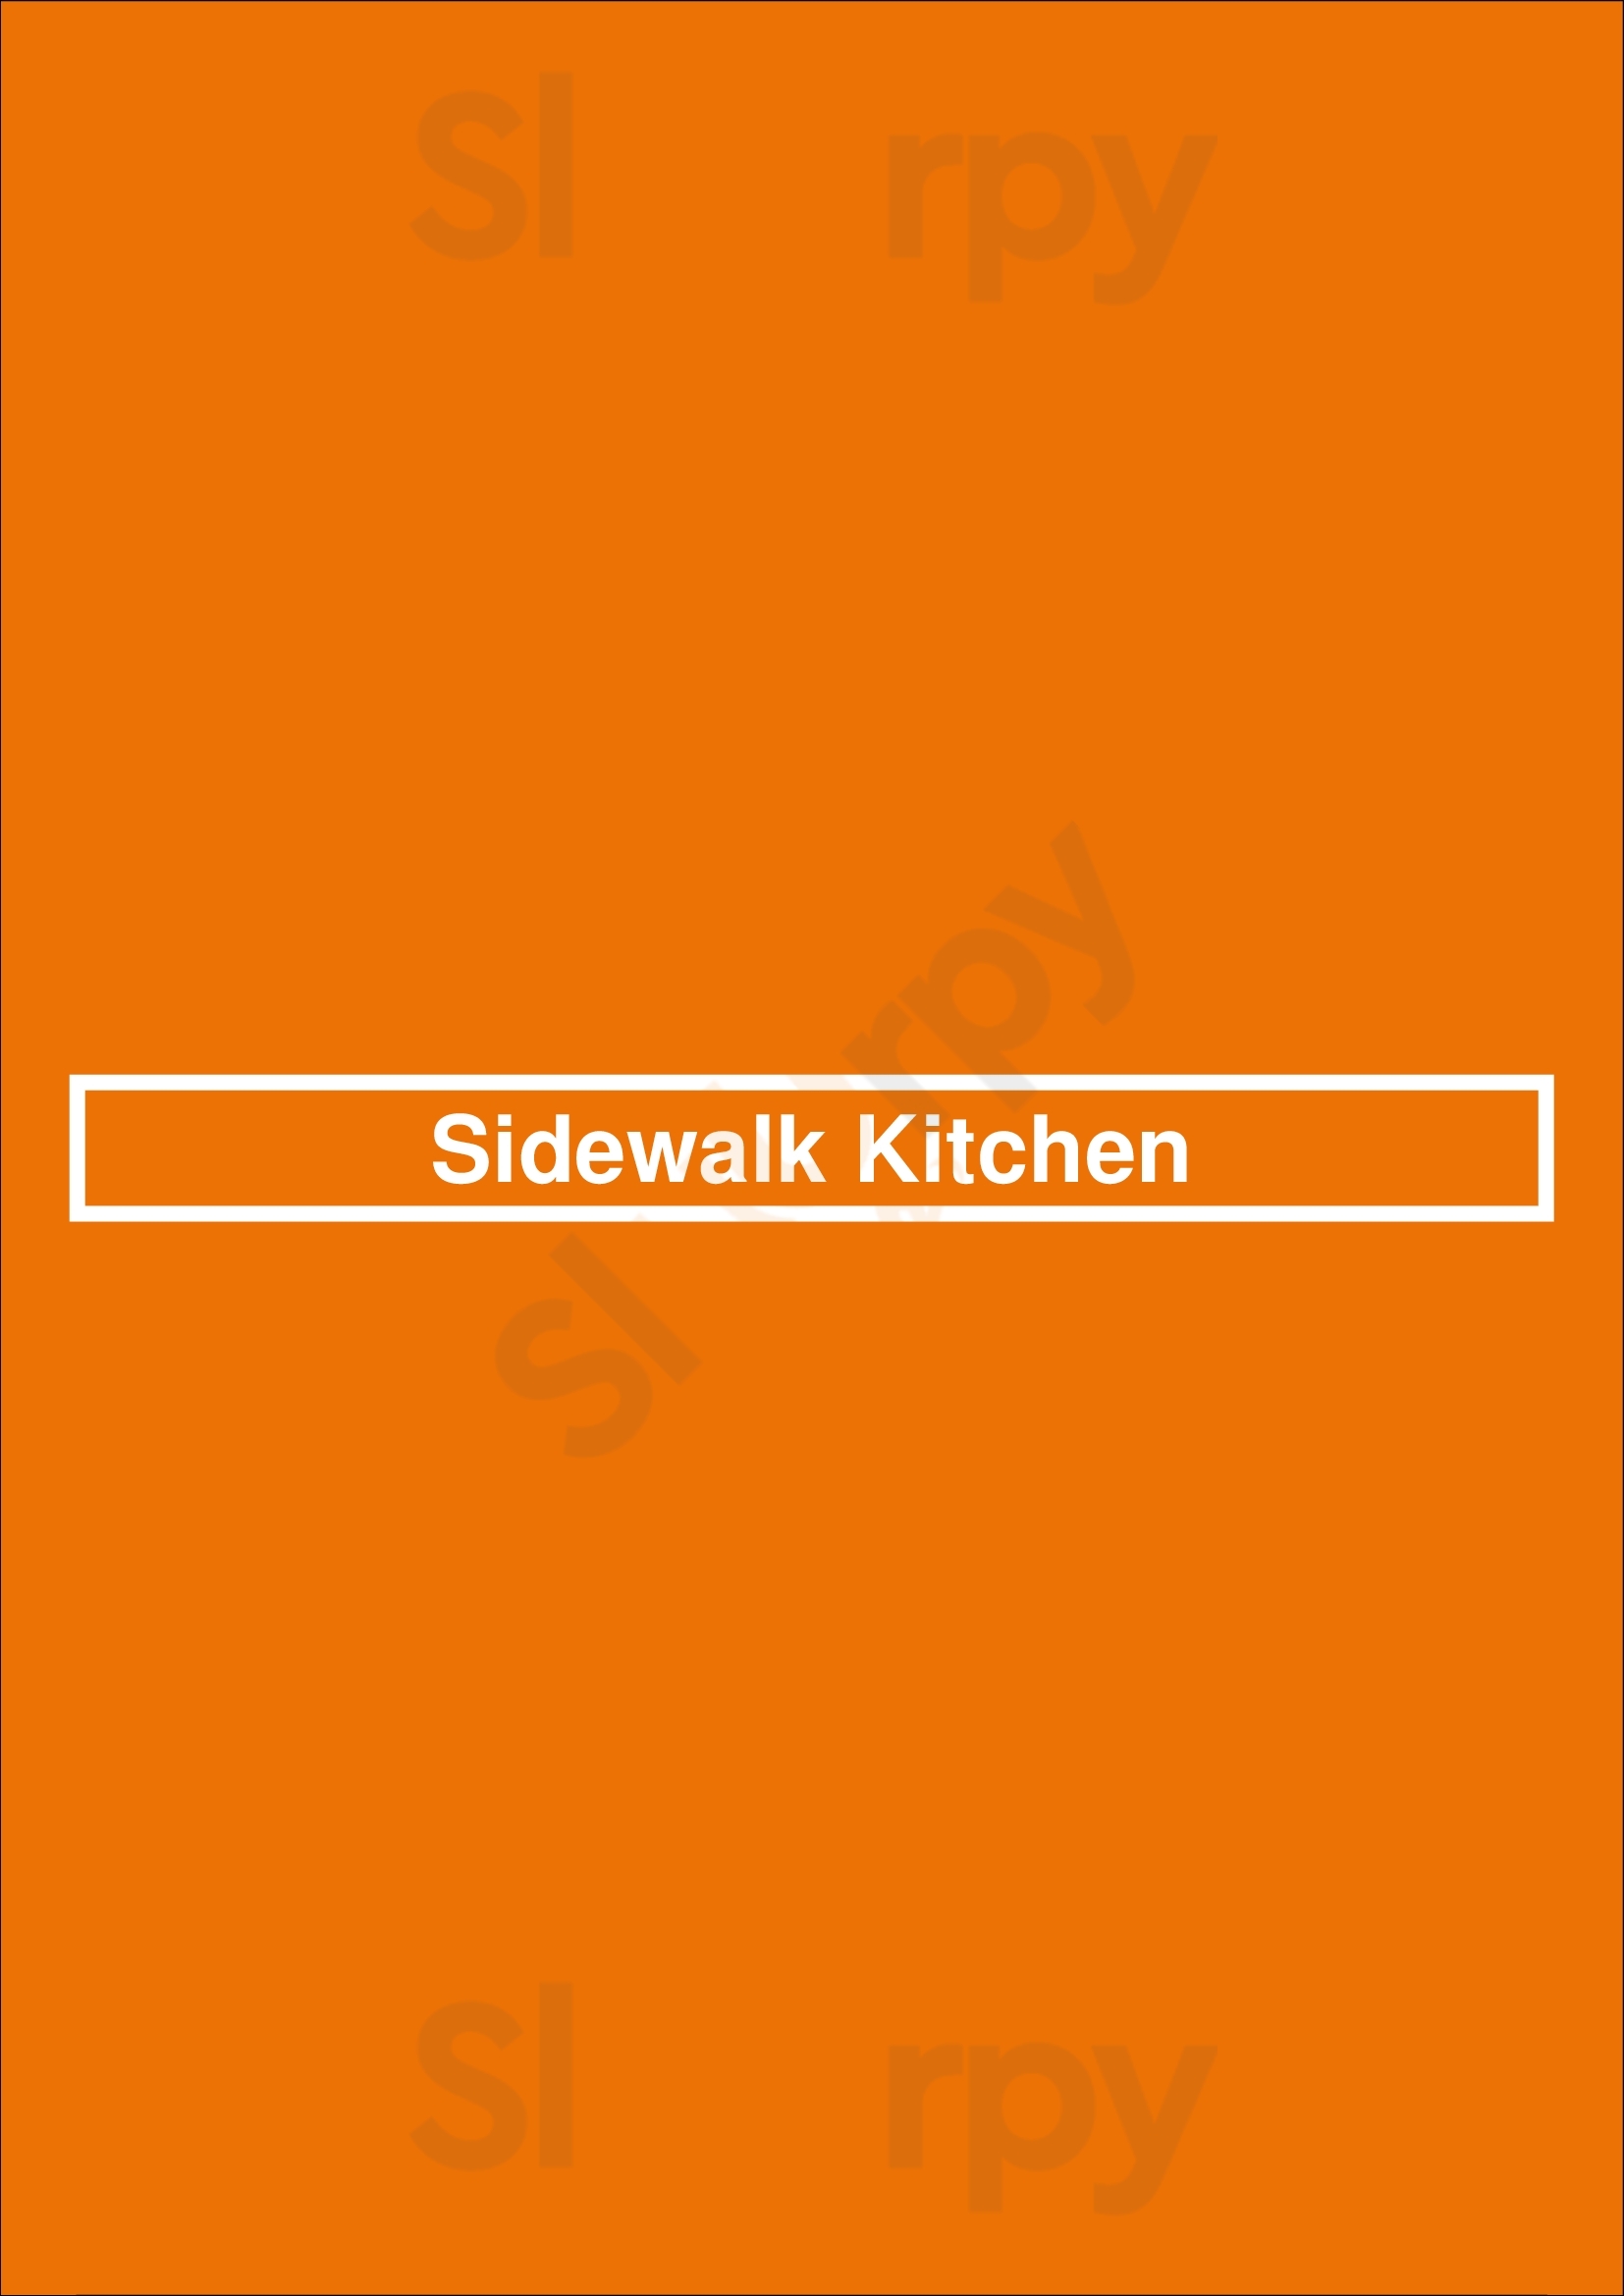 Sidewalk Kitchen Minneapolis Menu - 1